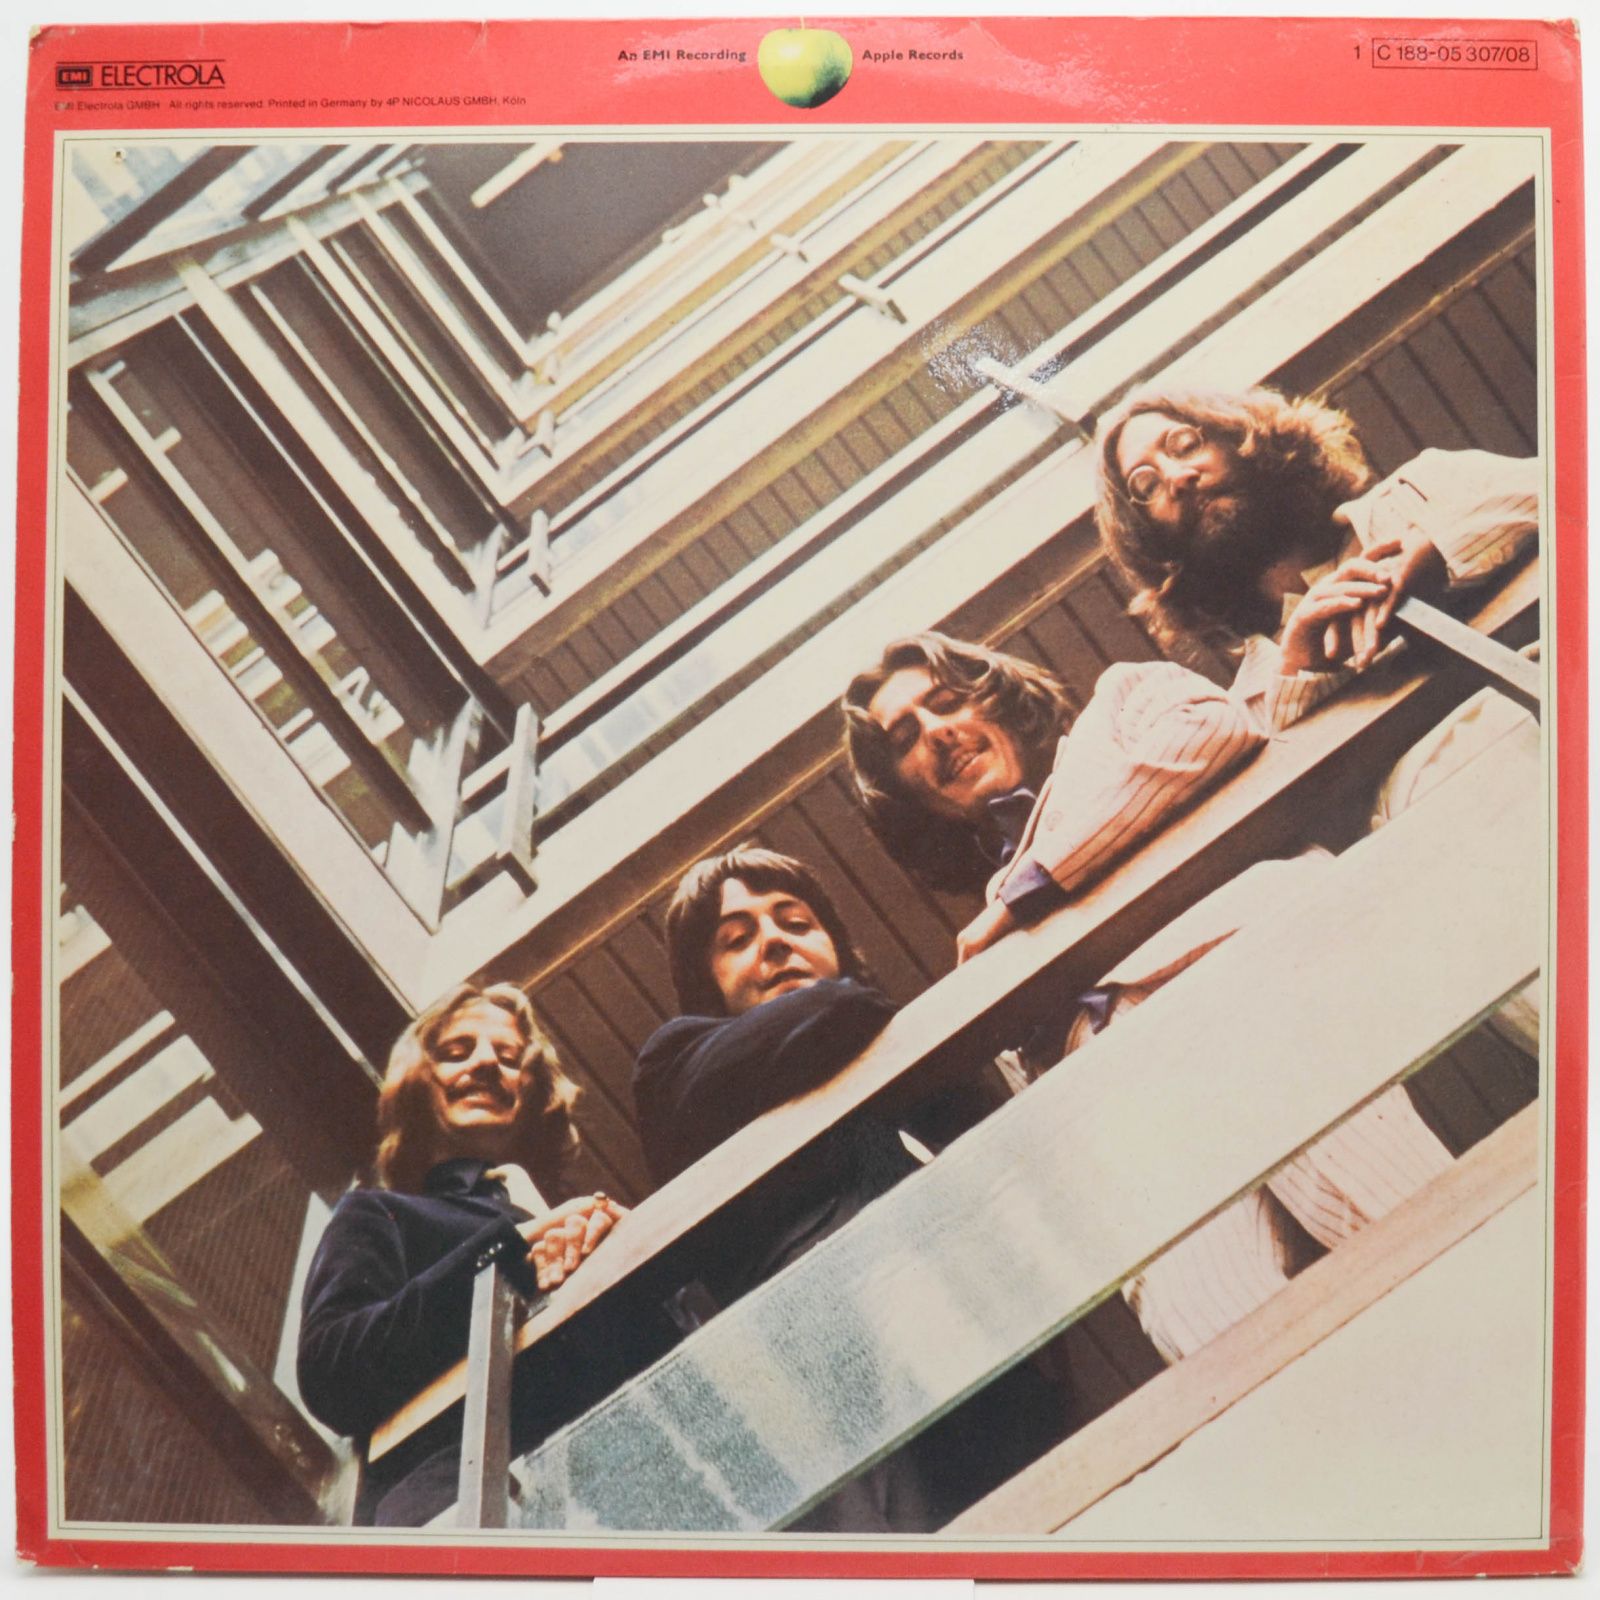 Beatles — 1962-1966 (2LP), 1973